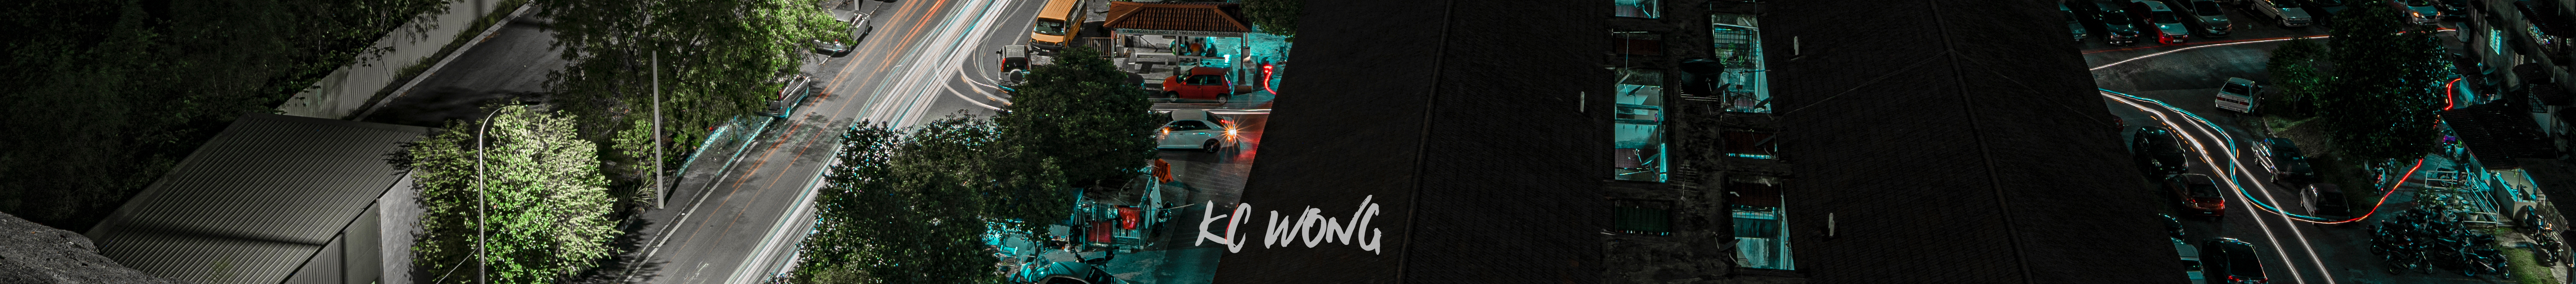 Banner profilu uživatele KC WONG